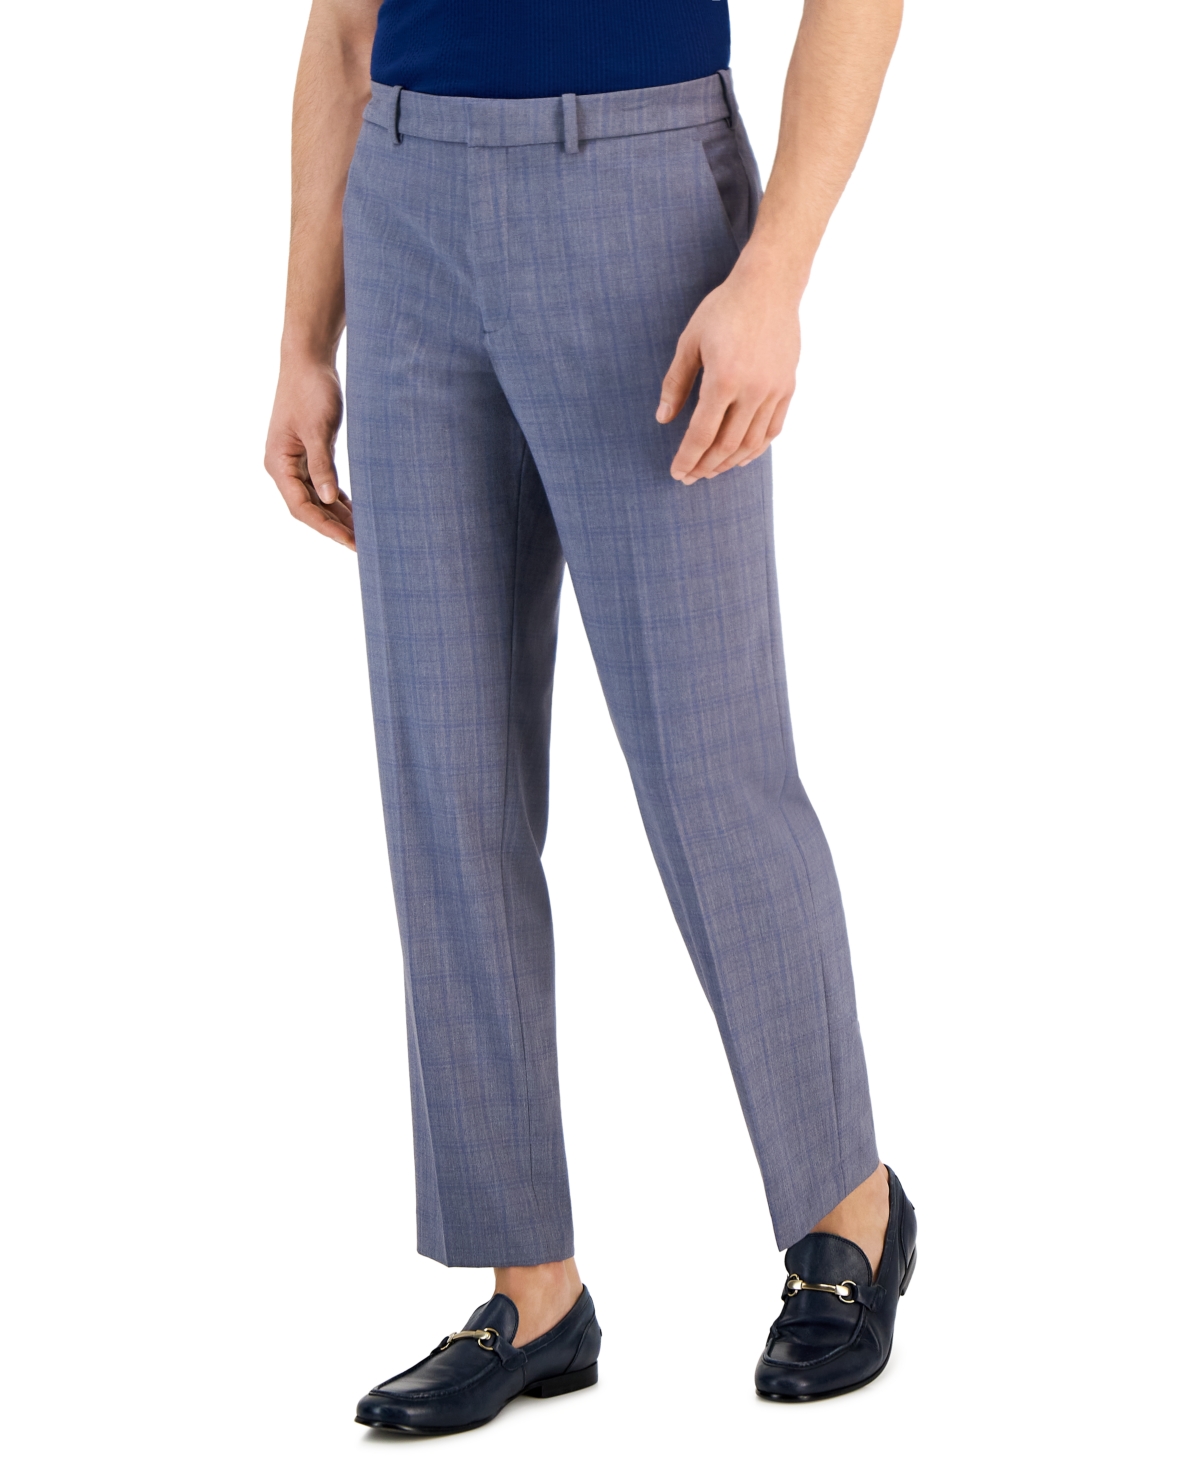 Men's Modern-Fit Stretch Resolution Dress Pants - Mid Grey